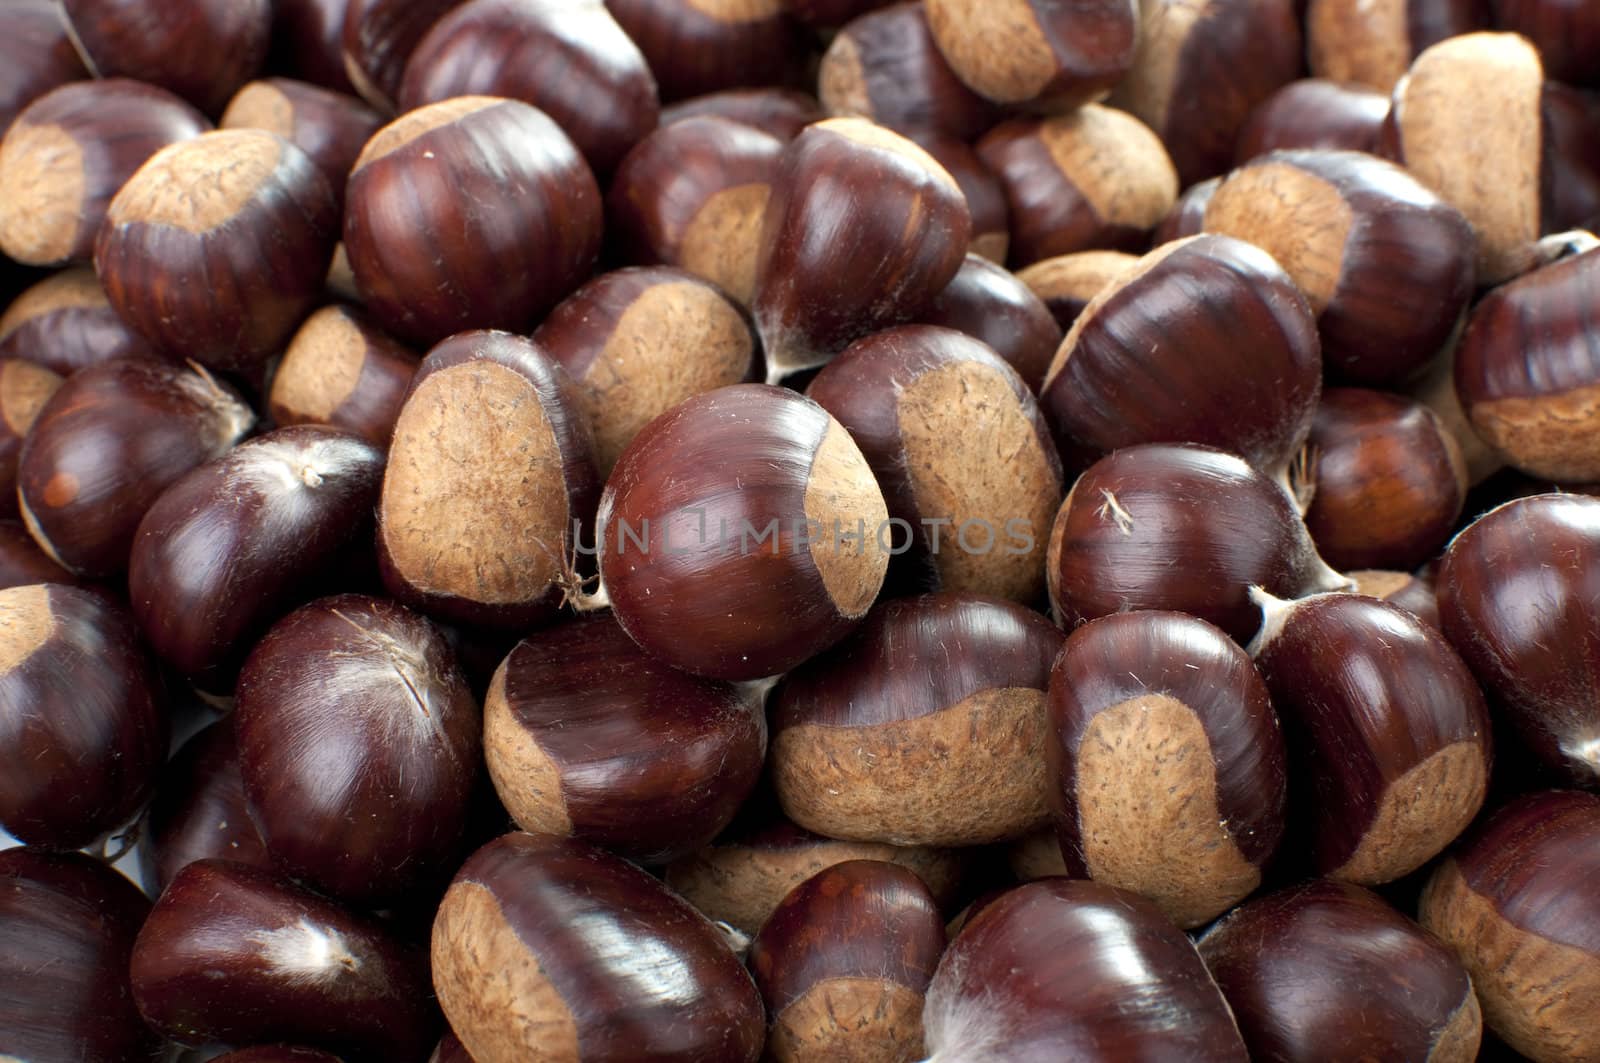 Plenty of Hand-picked Ripe Chestnuts in autumn